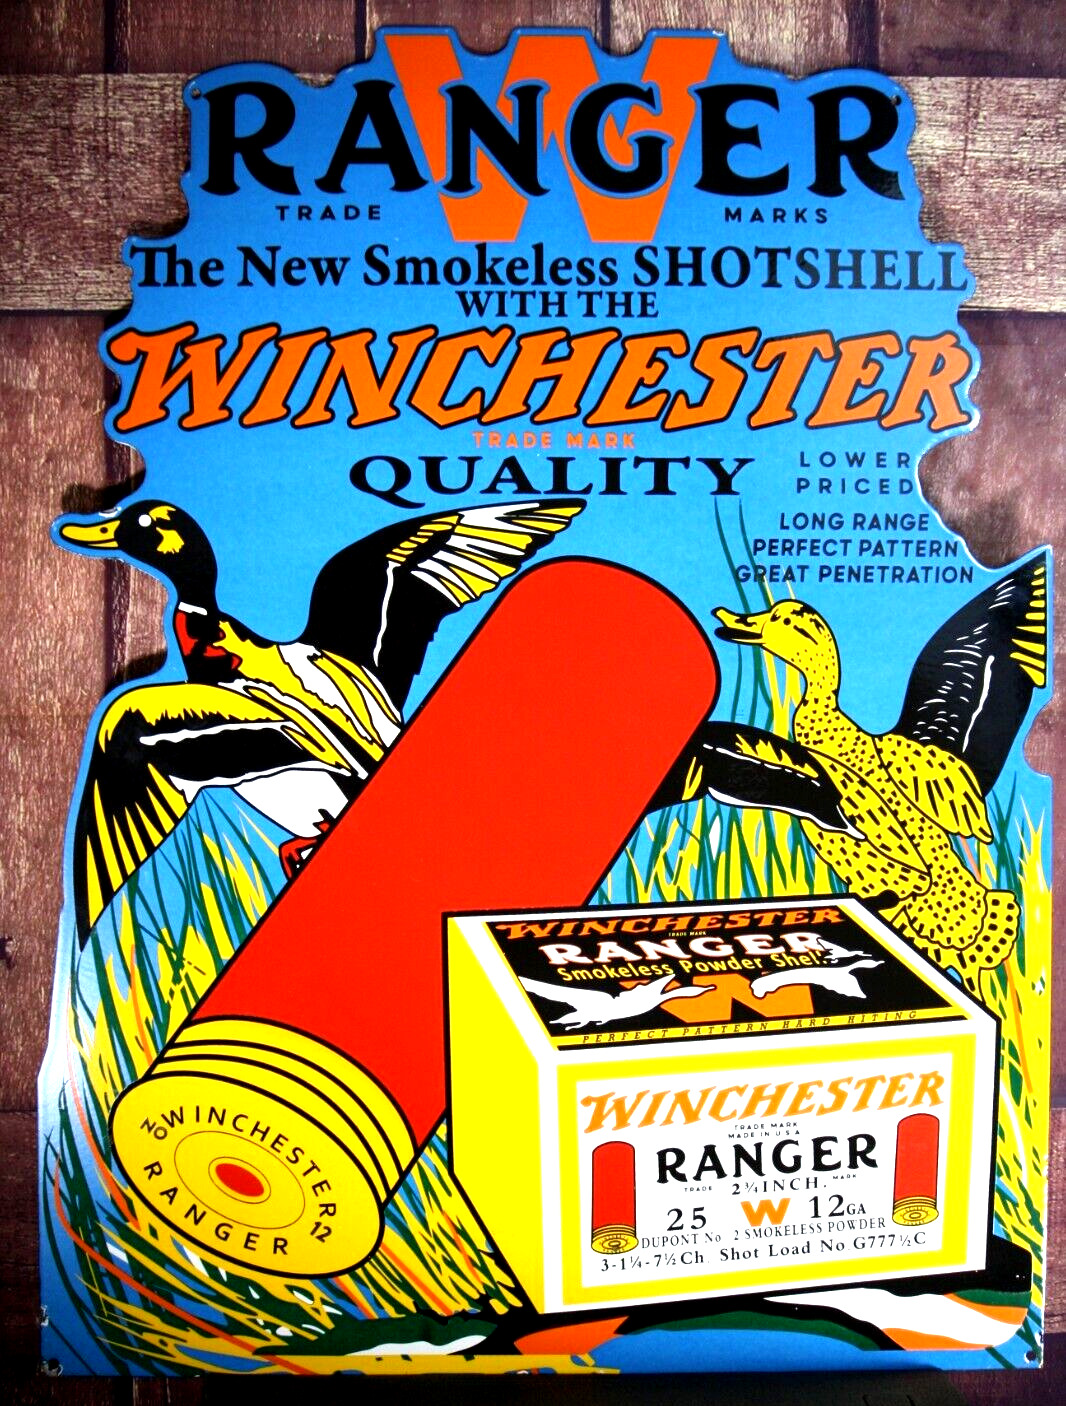 WINCHESTER RANGER SHOTSHELL 12 GA. PORCELAIN COLLECTIBLE, RUSTIC, ADVERTISING